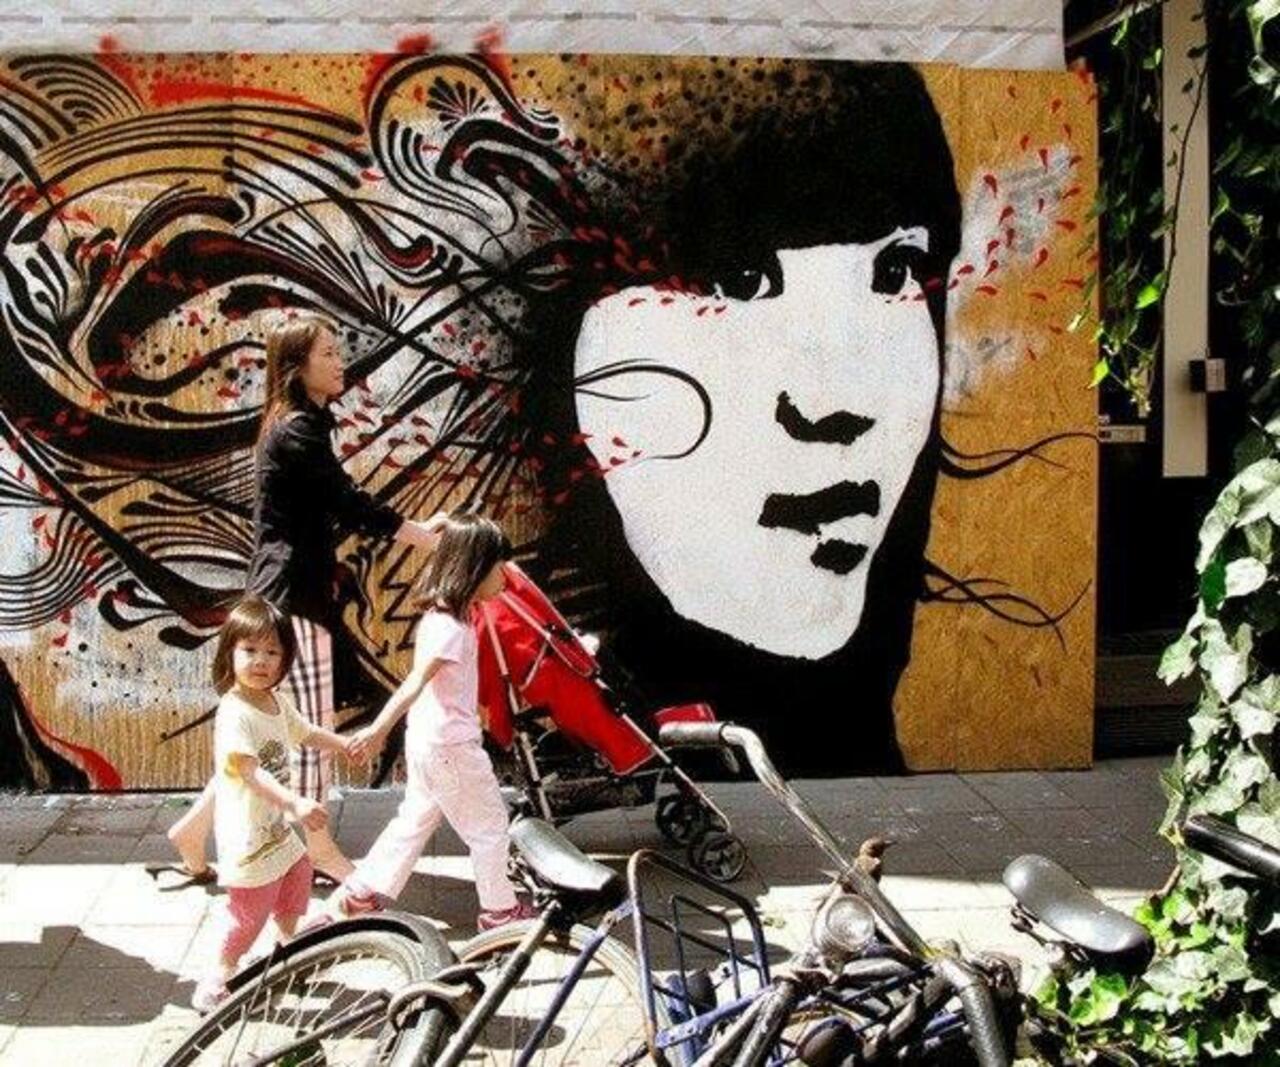 STINKFISH 
#streetart #art #graffiti #mural http://t.co/DUNF8x3wBl